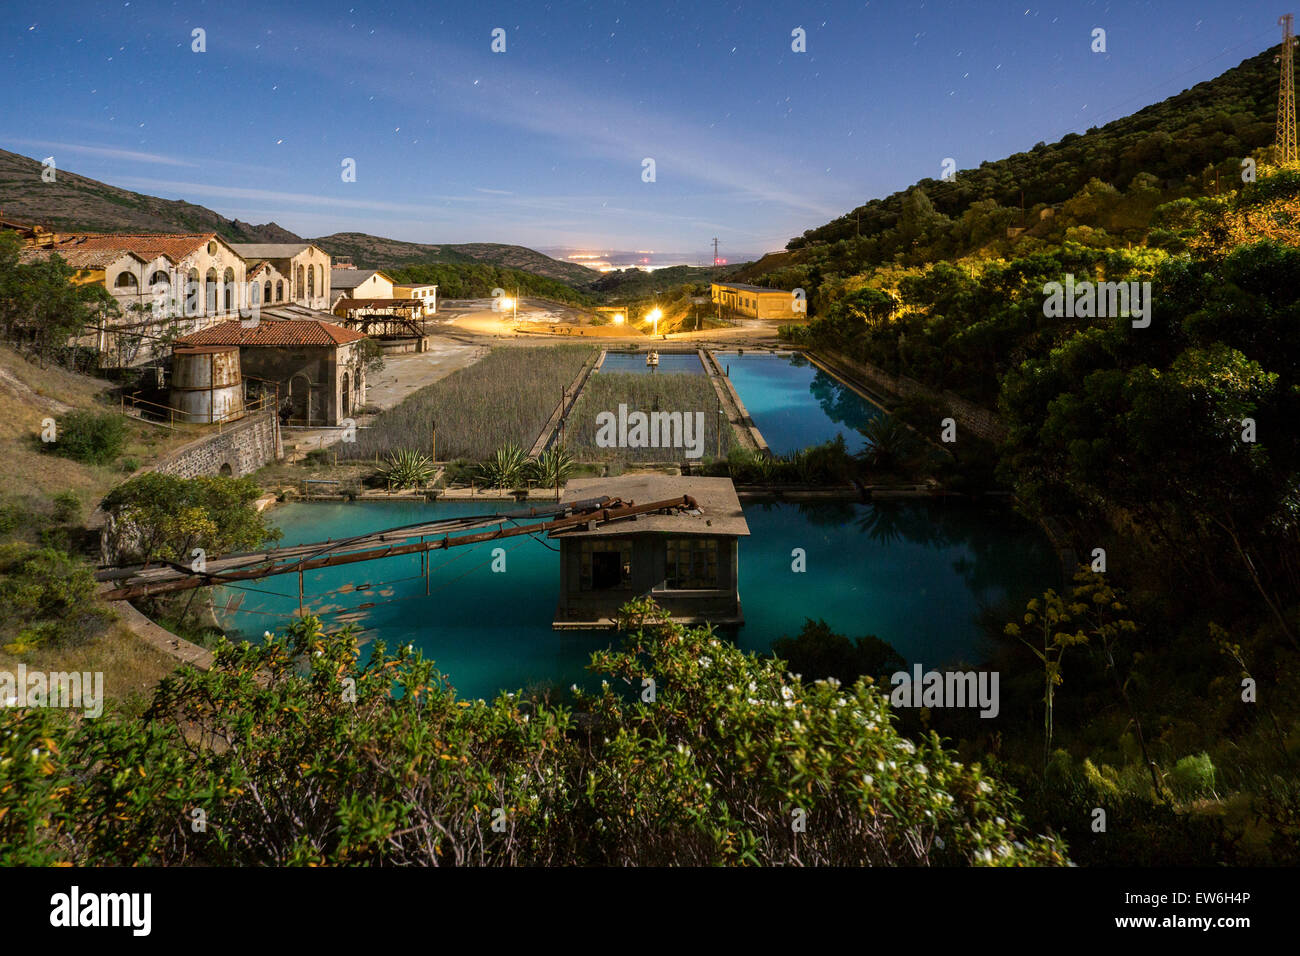 Pozzo Sartori's mine by night Banque D'Images